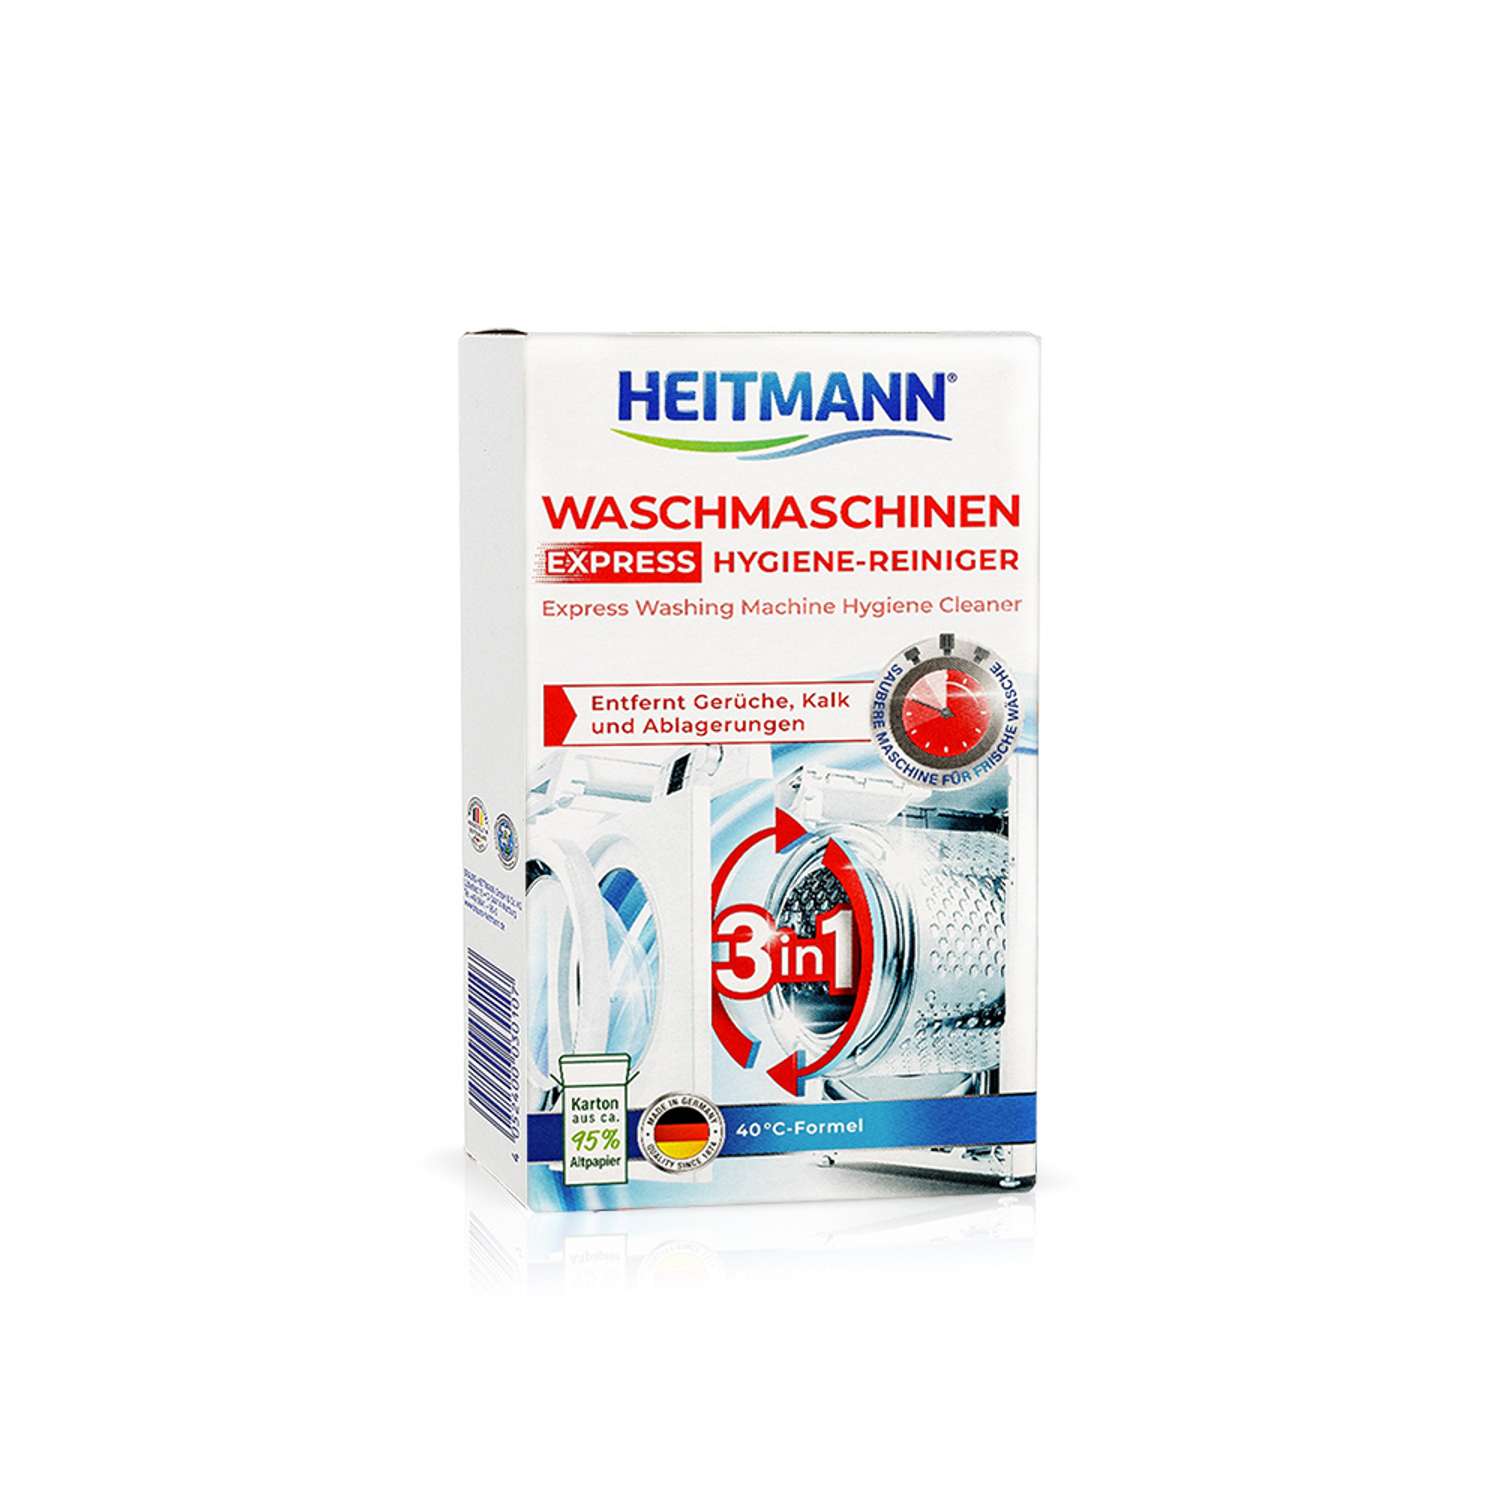 Экспресс-очиститель Heitmann для стиральных машин Waschmaschinen Hygiene-Reiniger Express 250г - фото 1